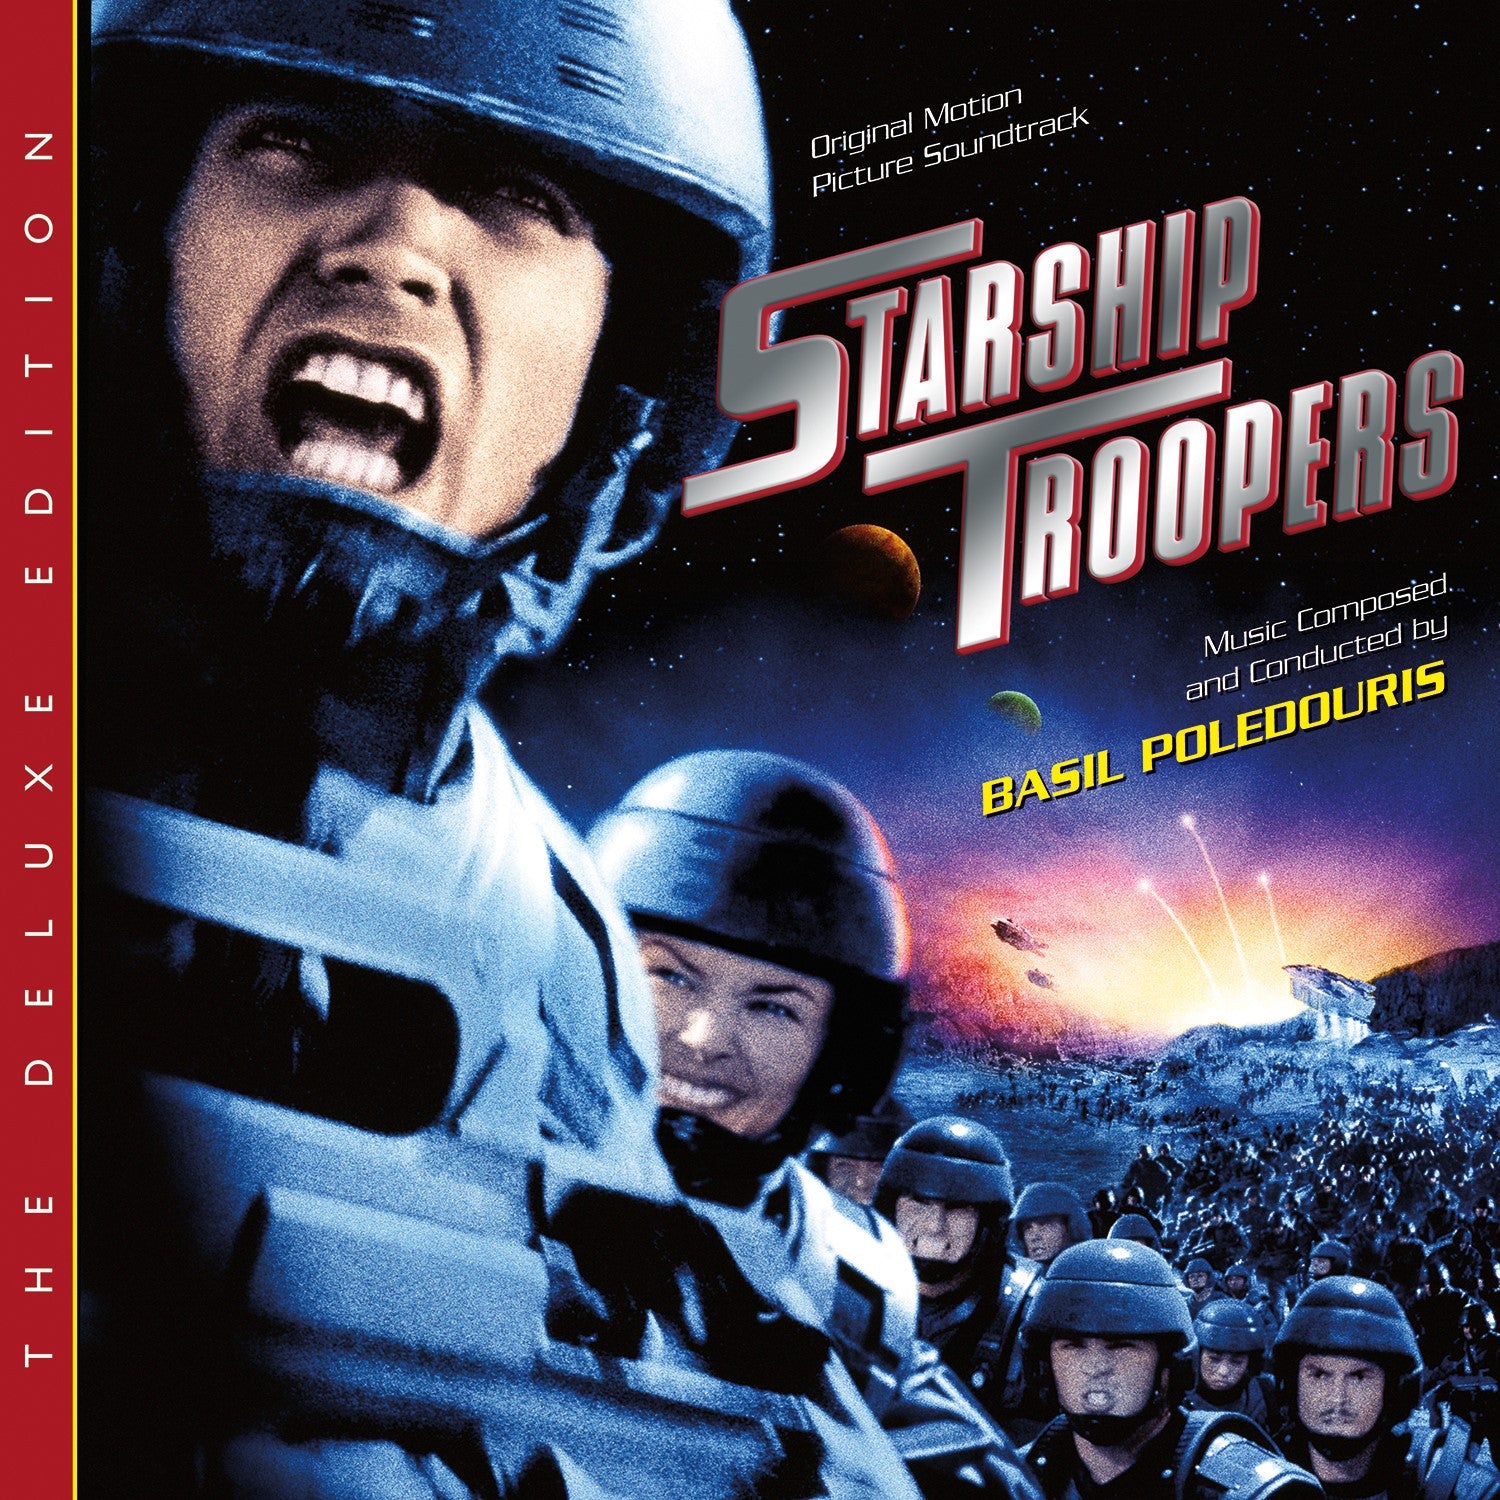 Starship_Troopers_2048x2048.jpg (1500×1500)